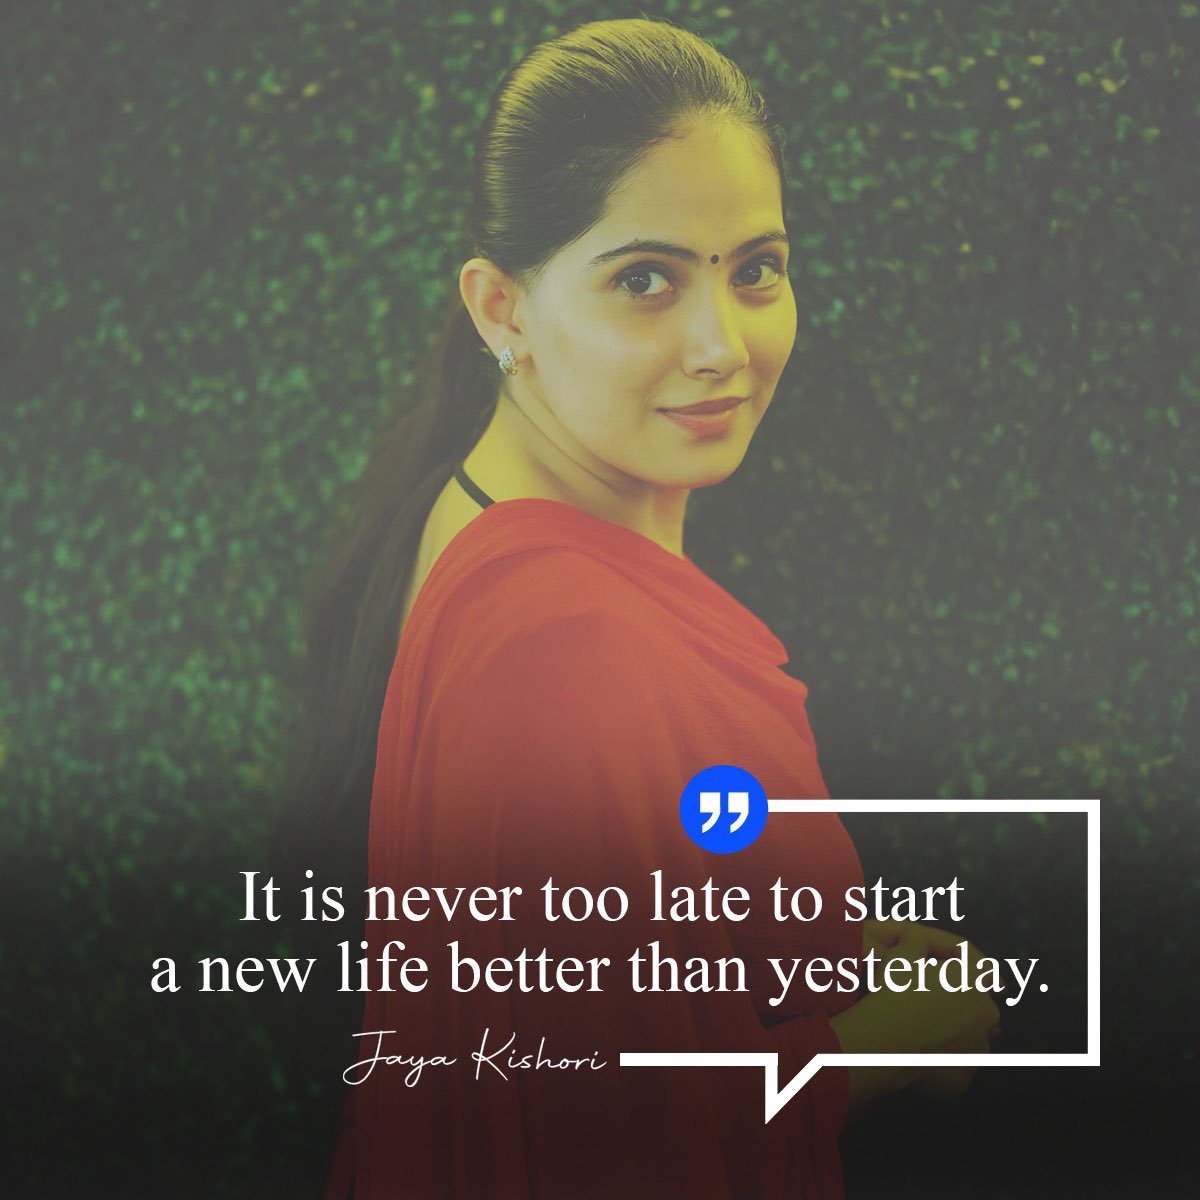 It is never too late to start a new life better than yesterday 😊

#jayakishori #jayakishorimotivation #motivationalquotes #harekrishna